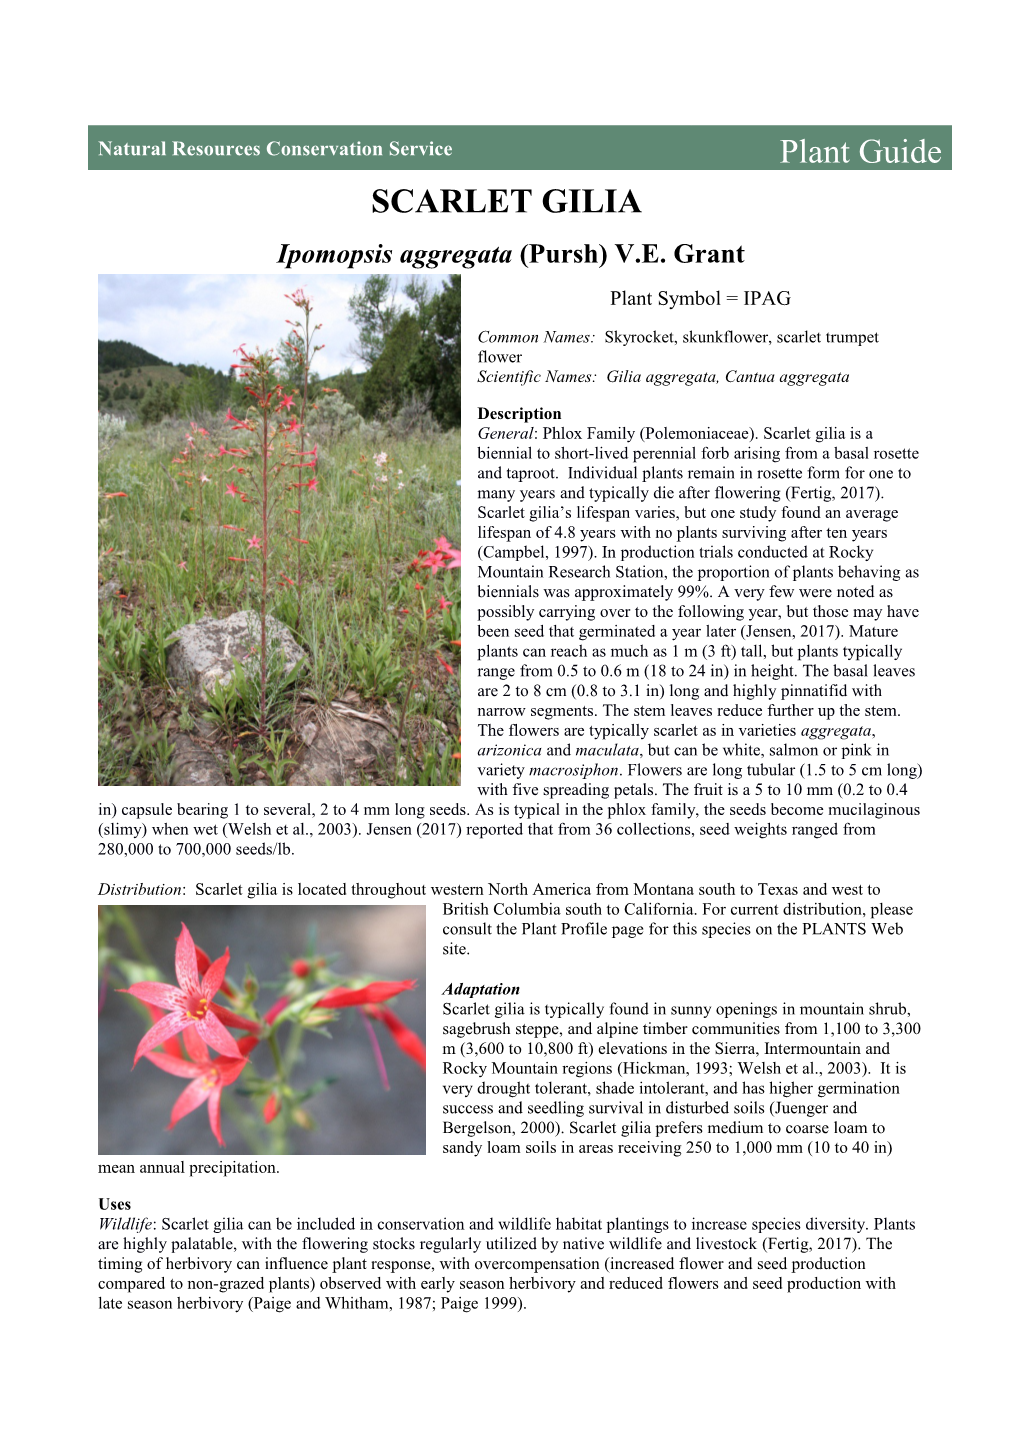 Plant Guide for Scarlet Gilia (Ipomopsis Aggregata)